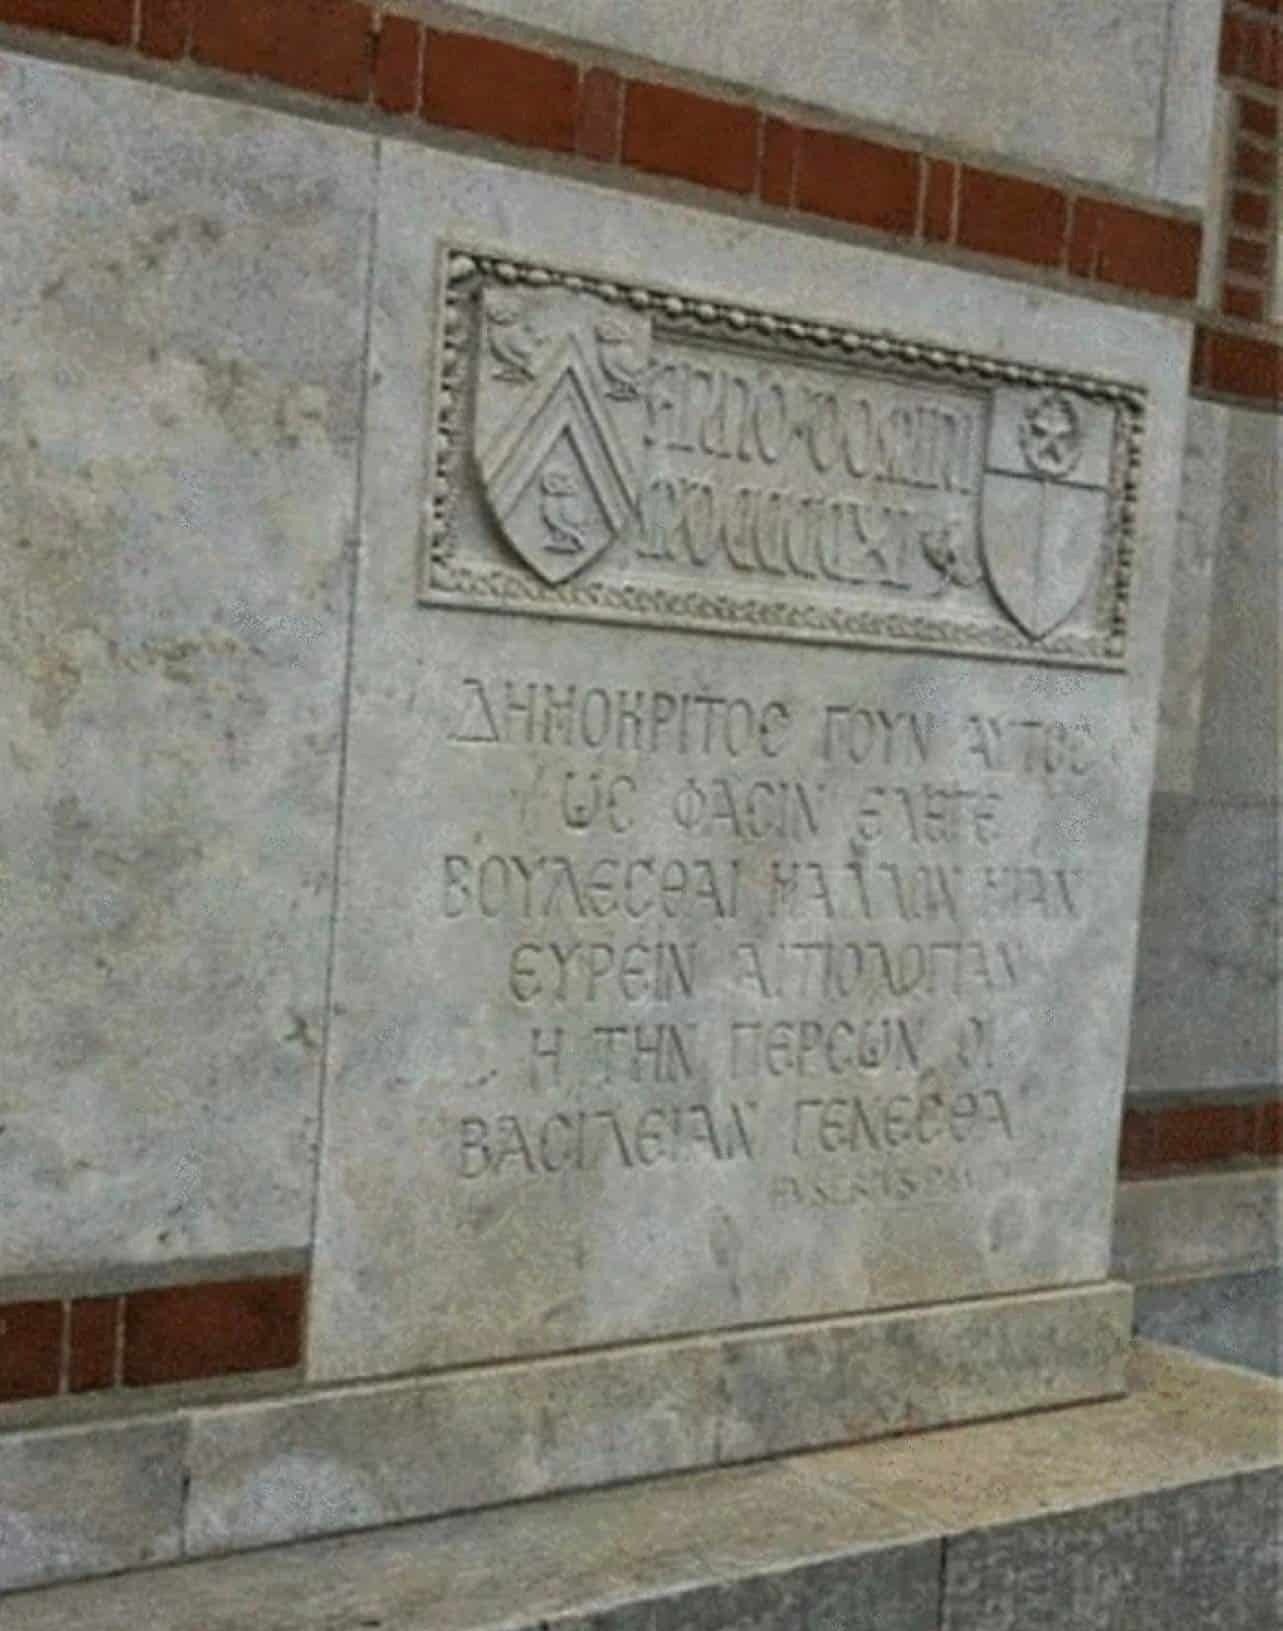 Inscription at the University of Texas